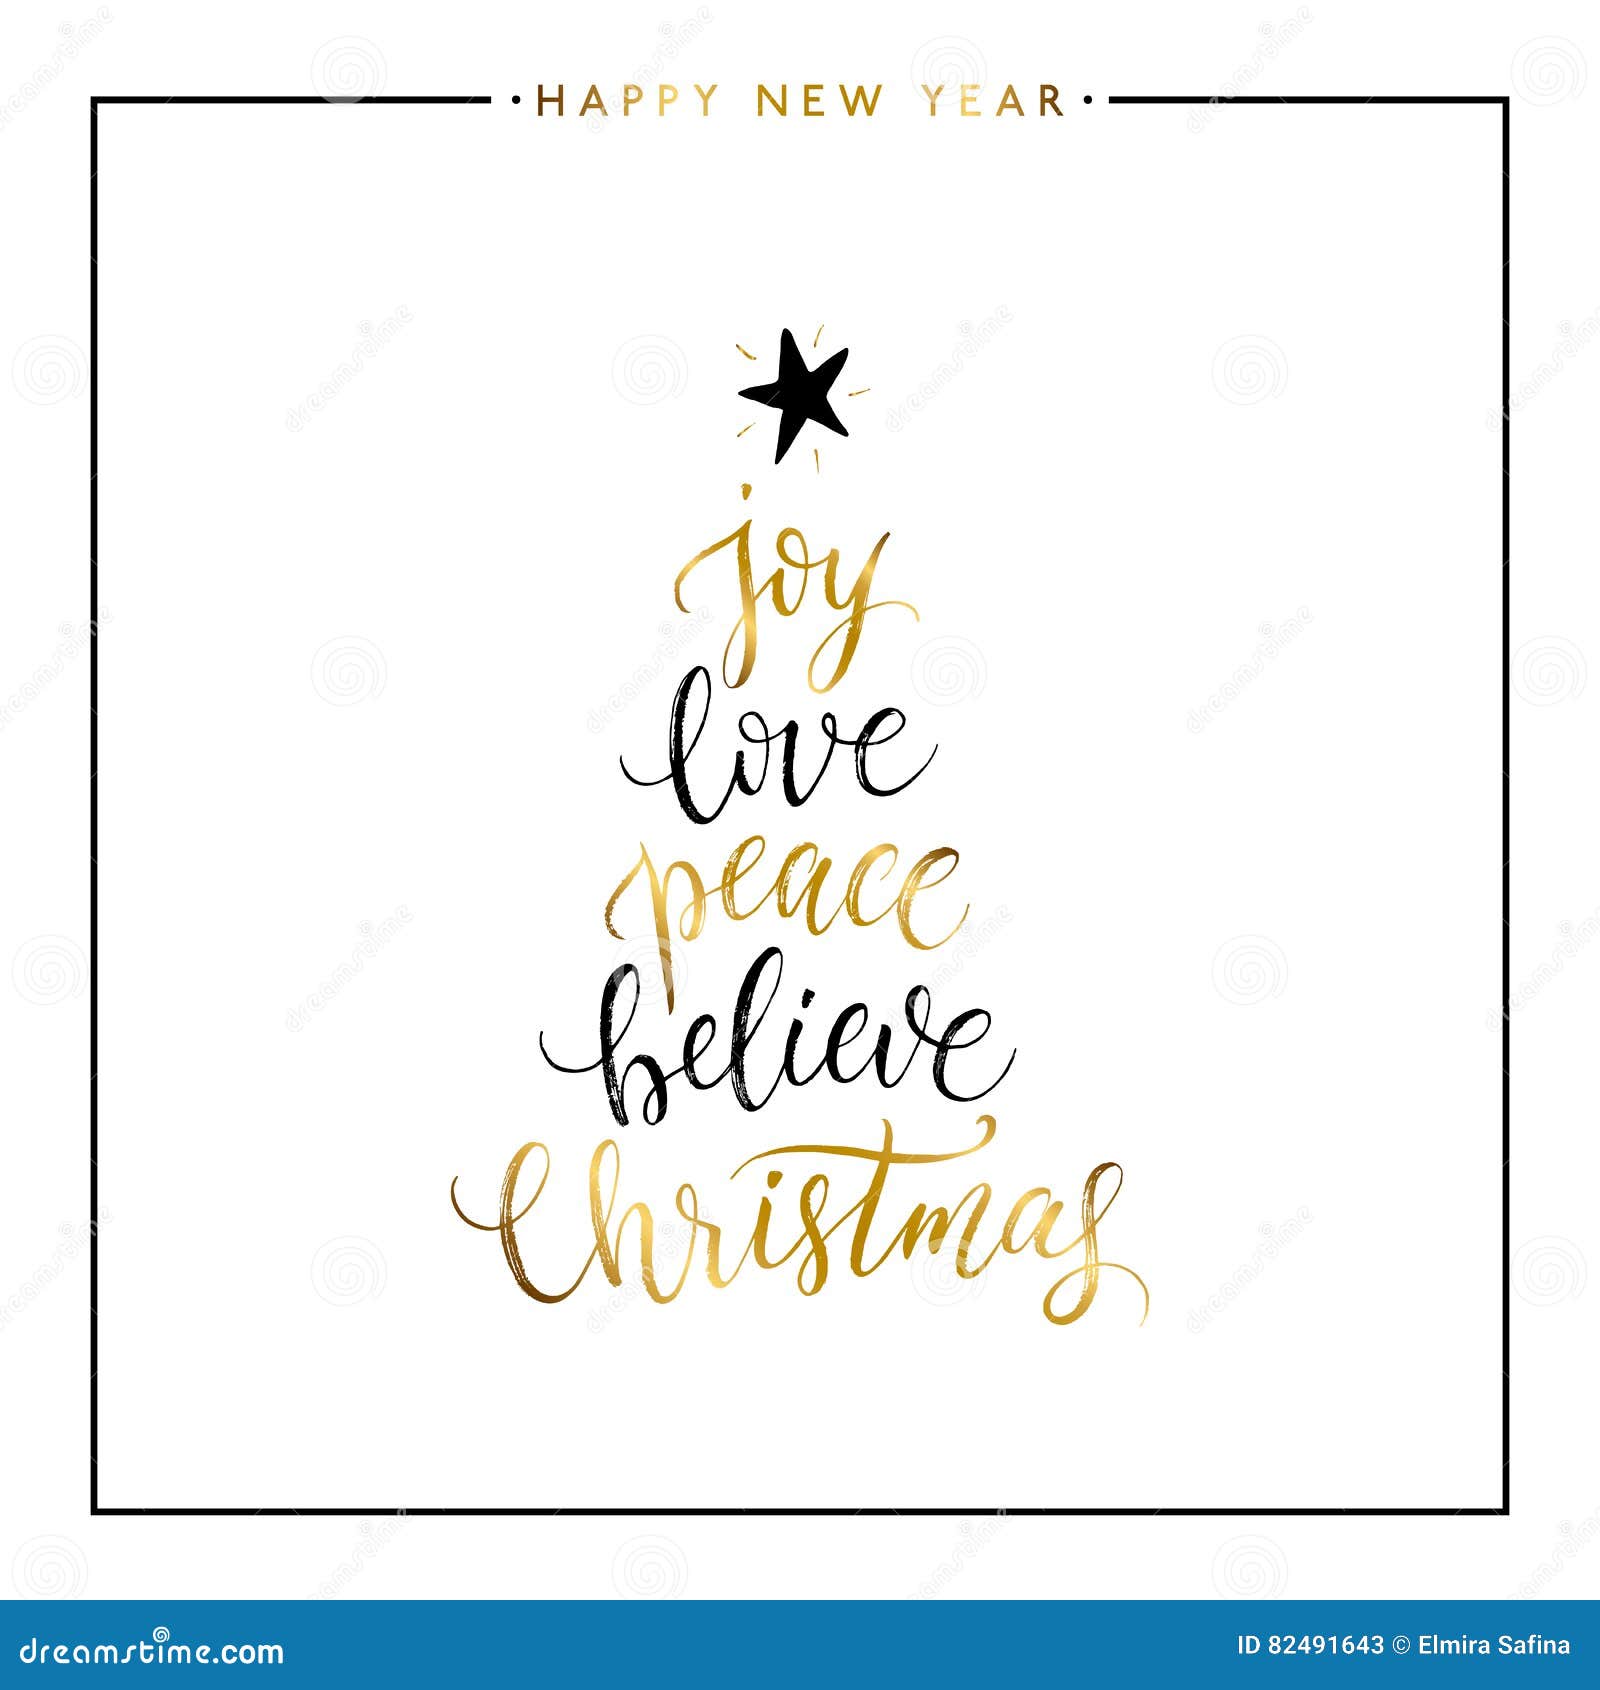 joy, love, peace, believe, christmas gold text 